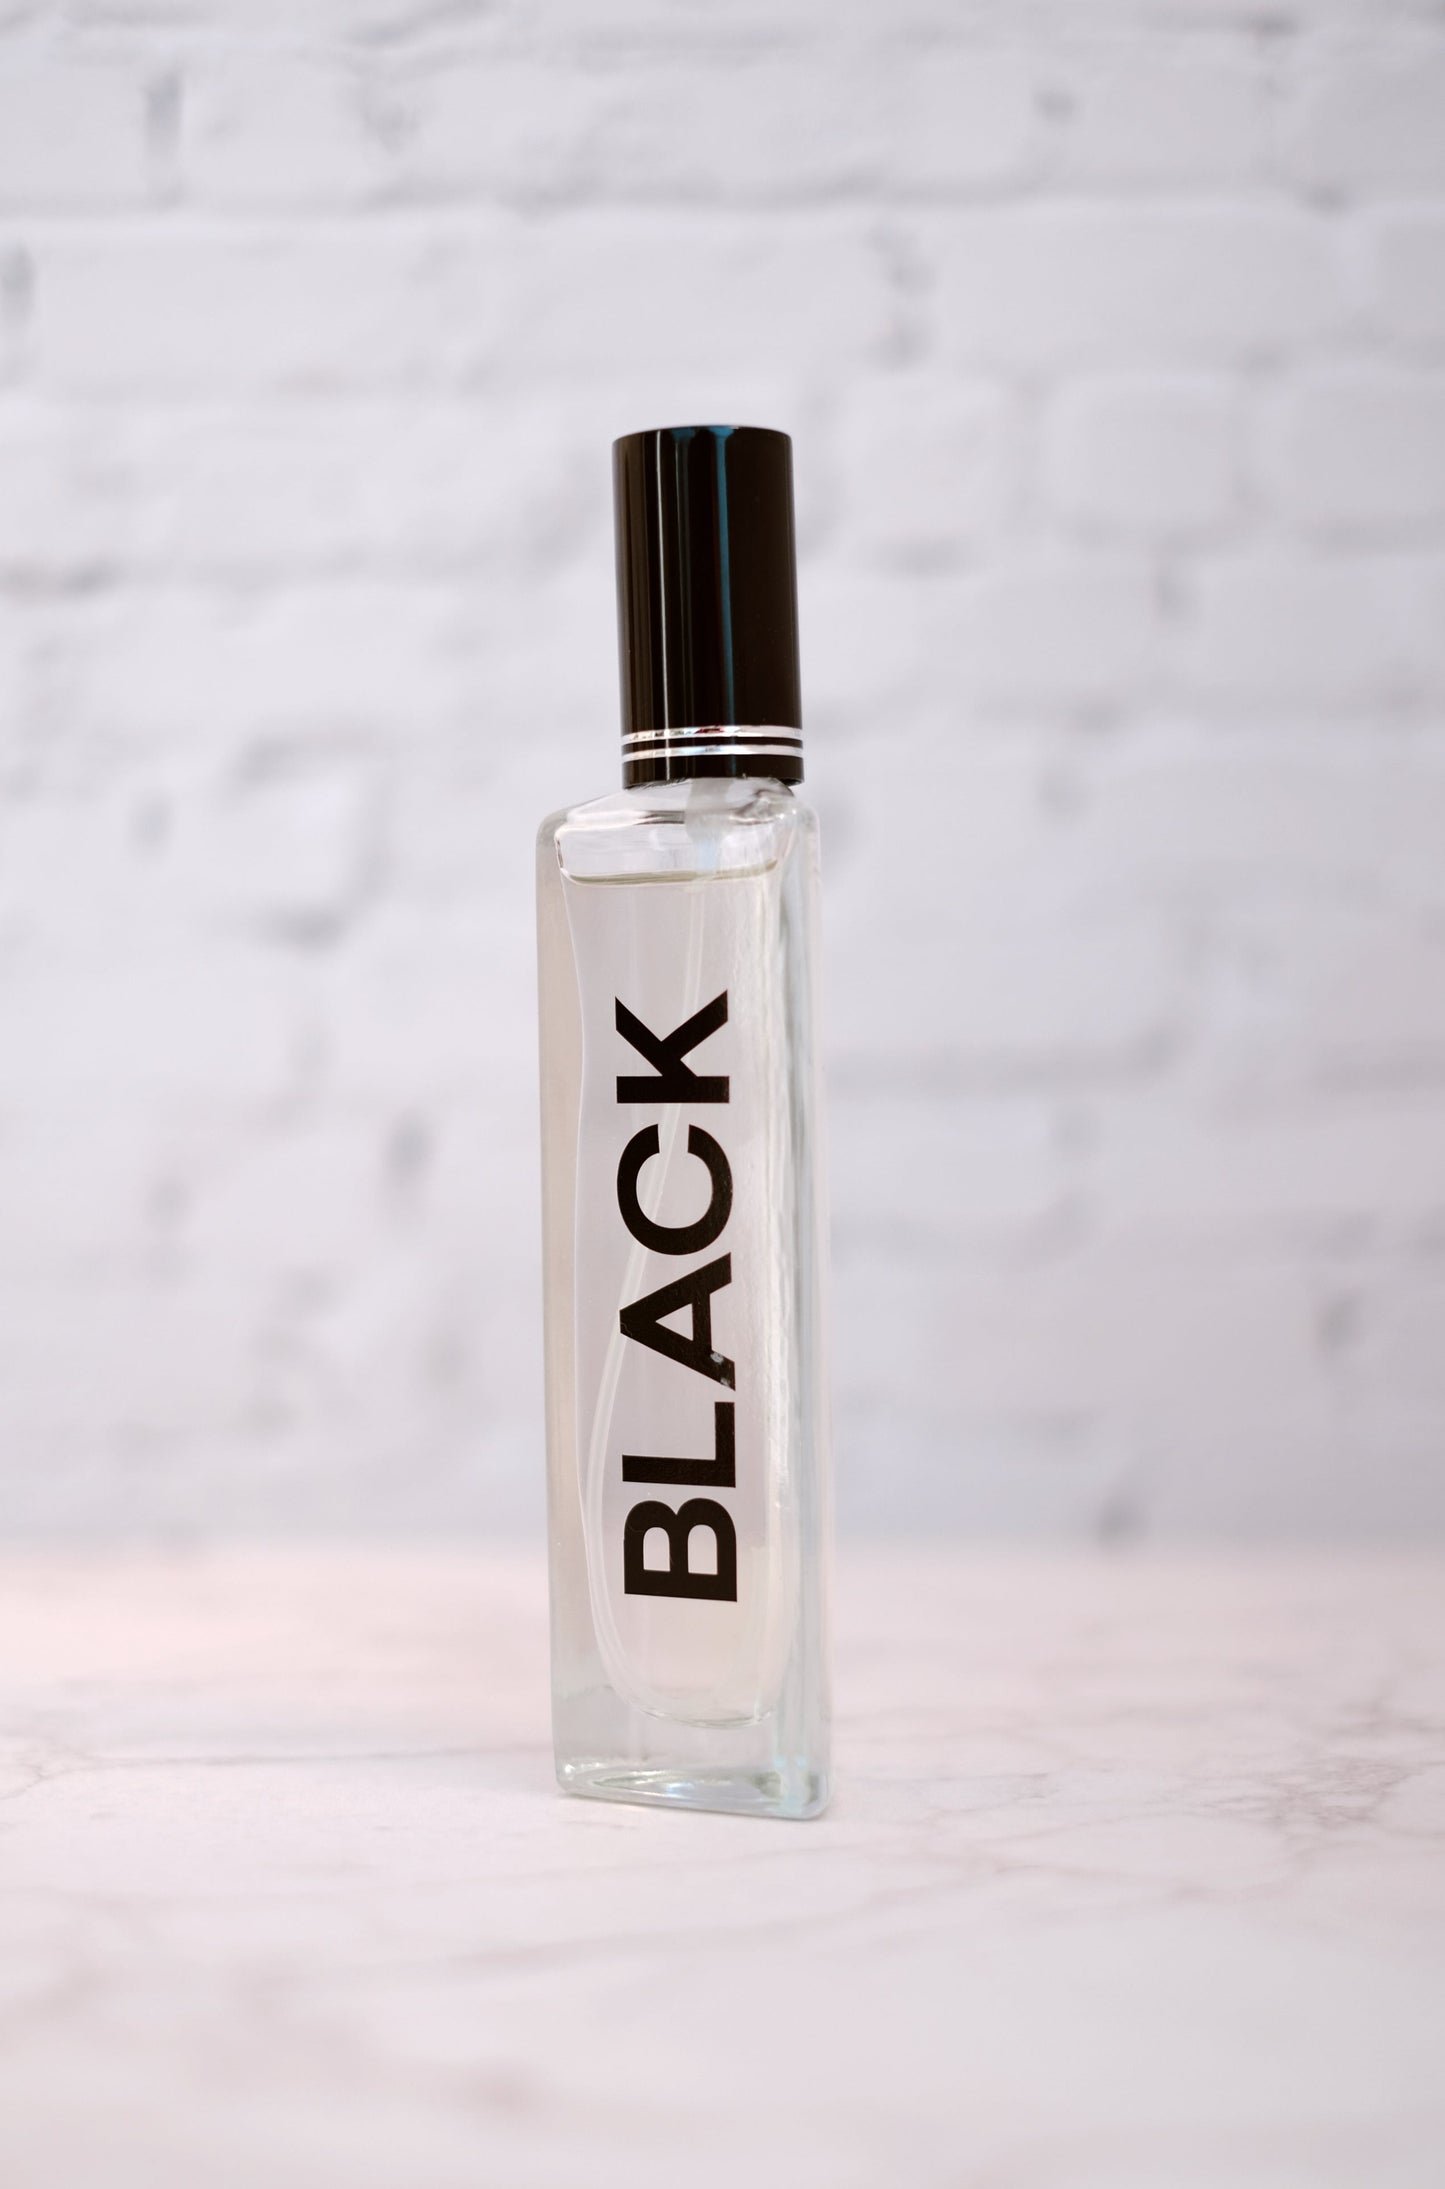 Black Perfume